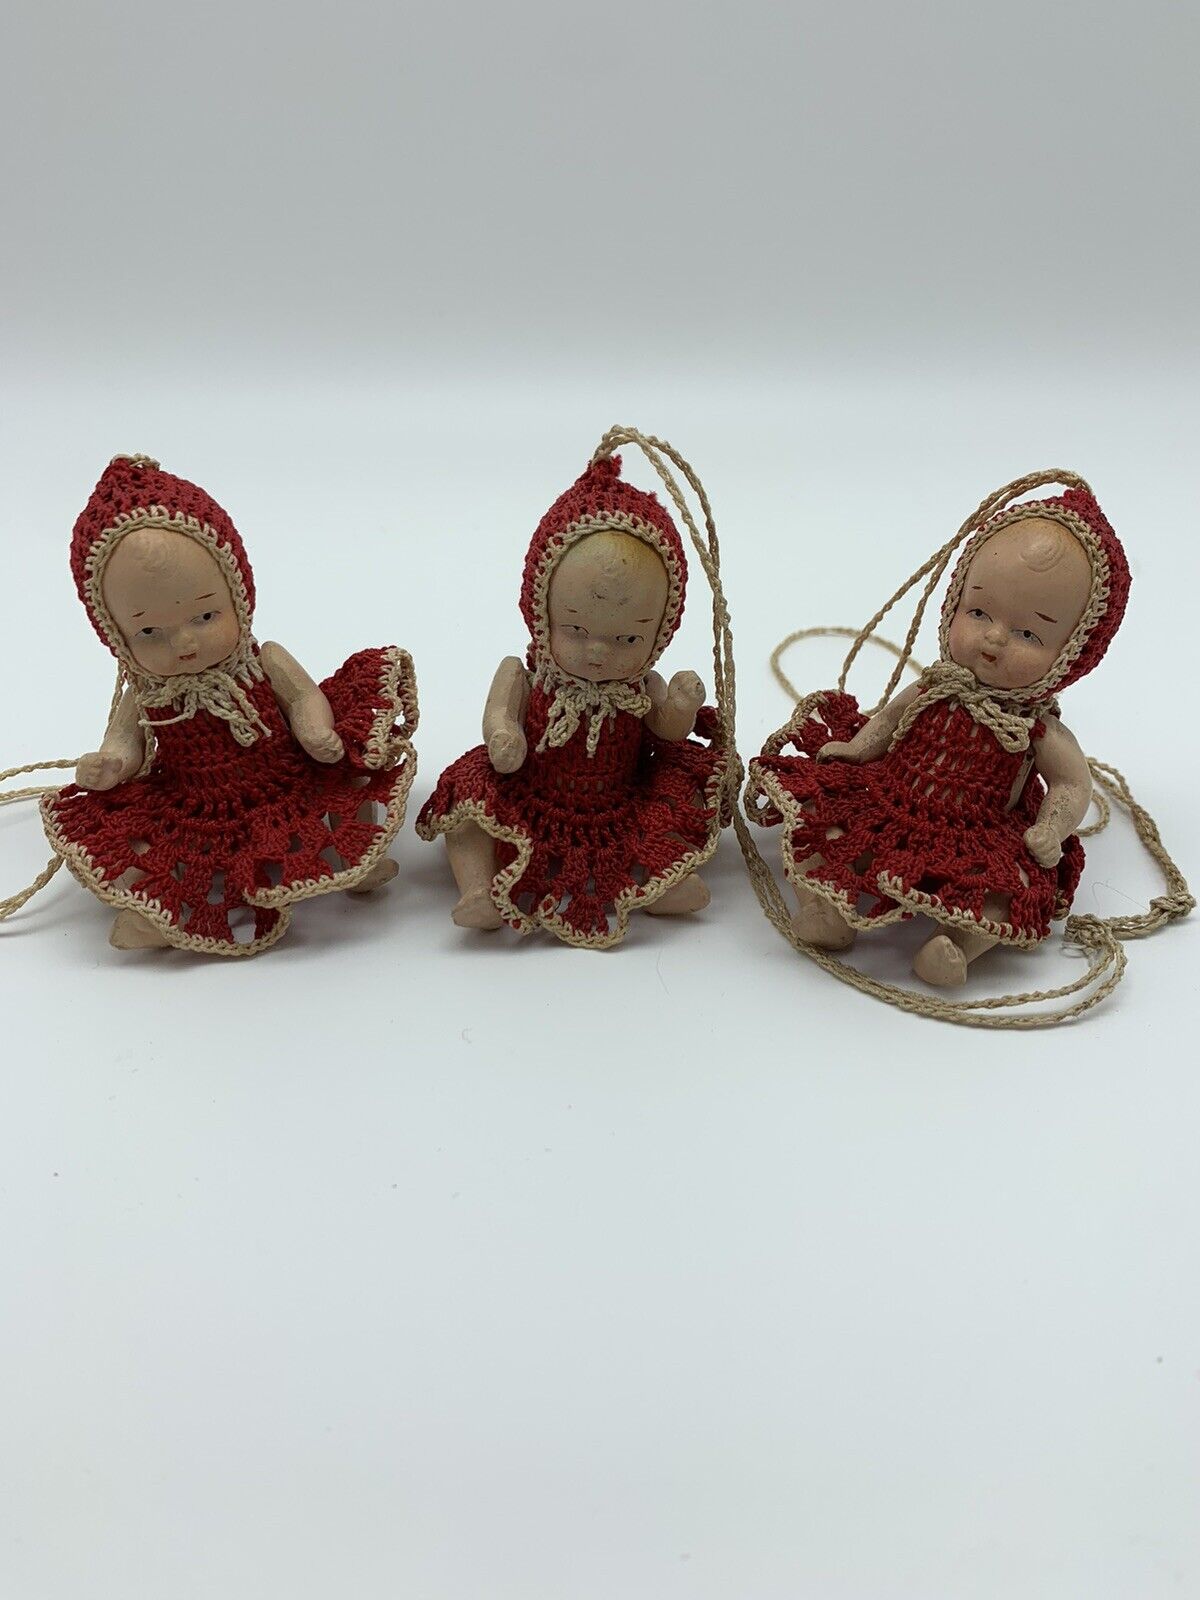 Vintage Jointed Miniature Diminutive Doll Figurines Triplets Handmade Outfits